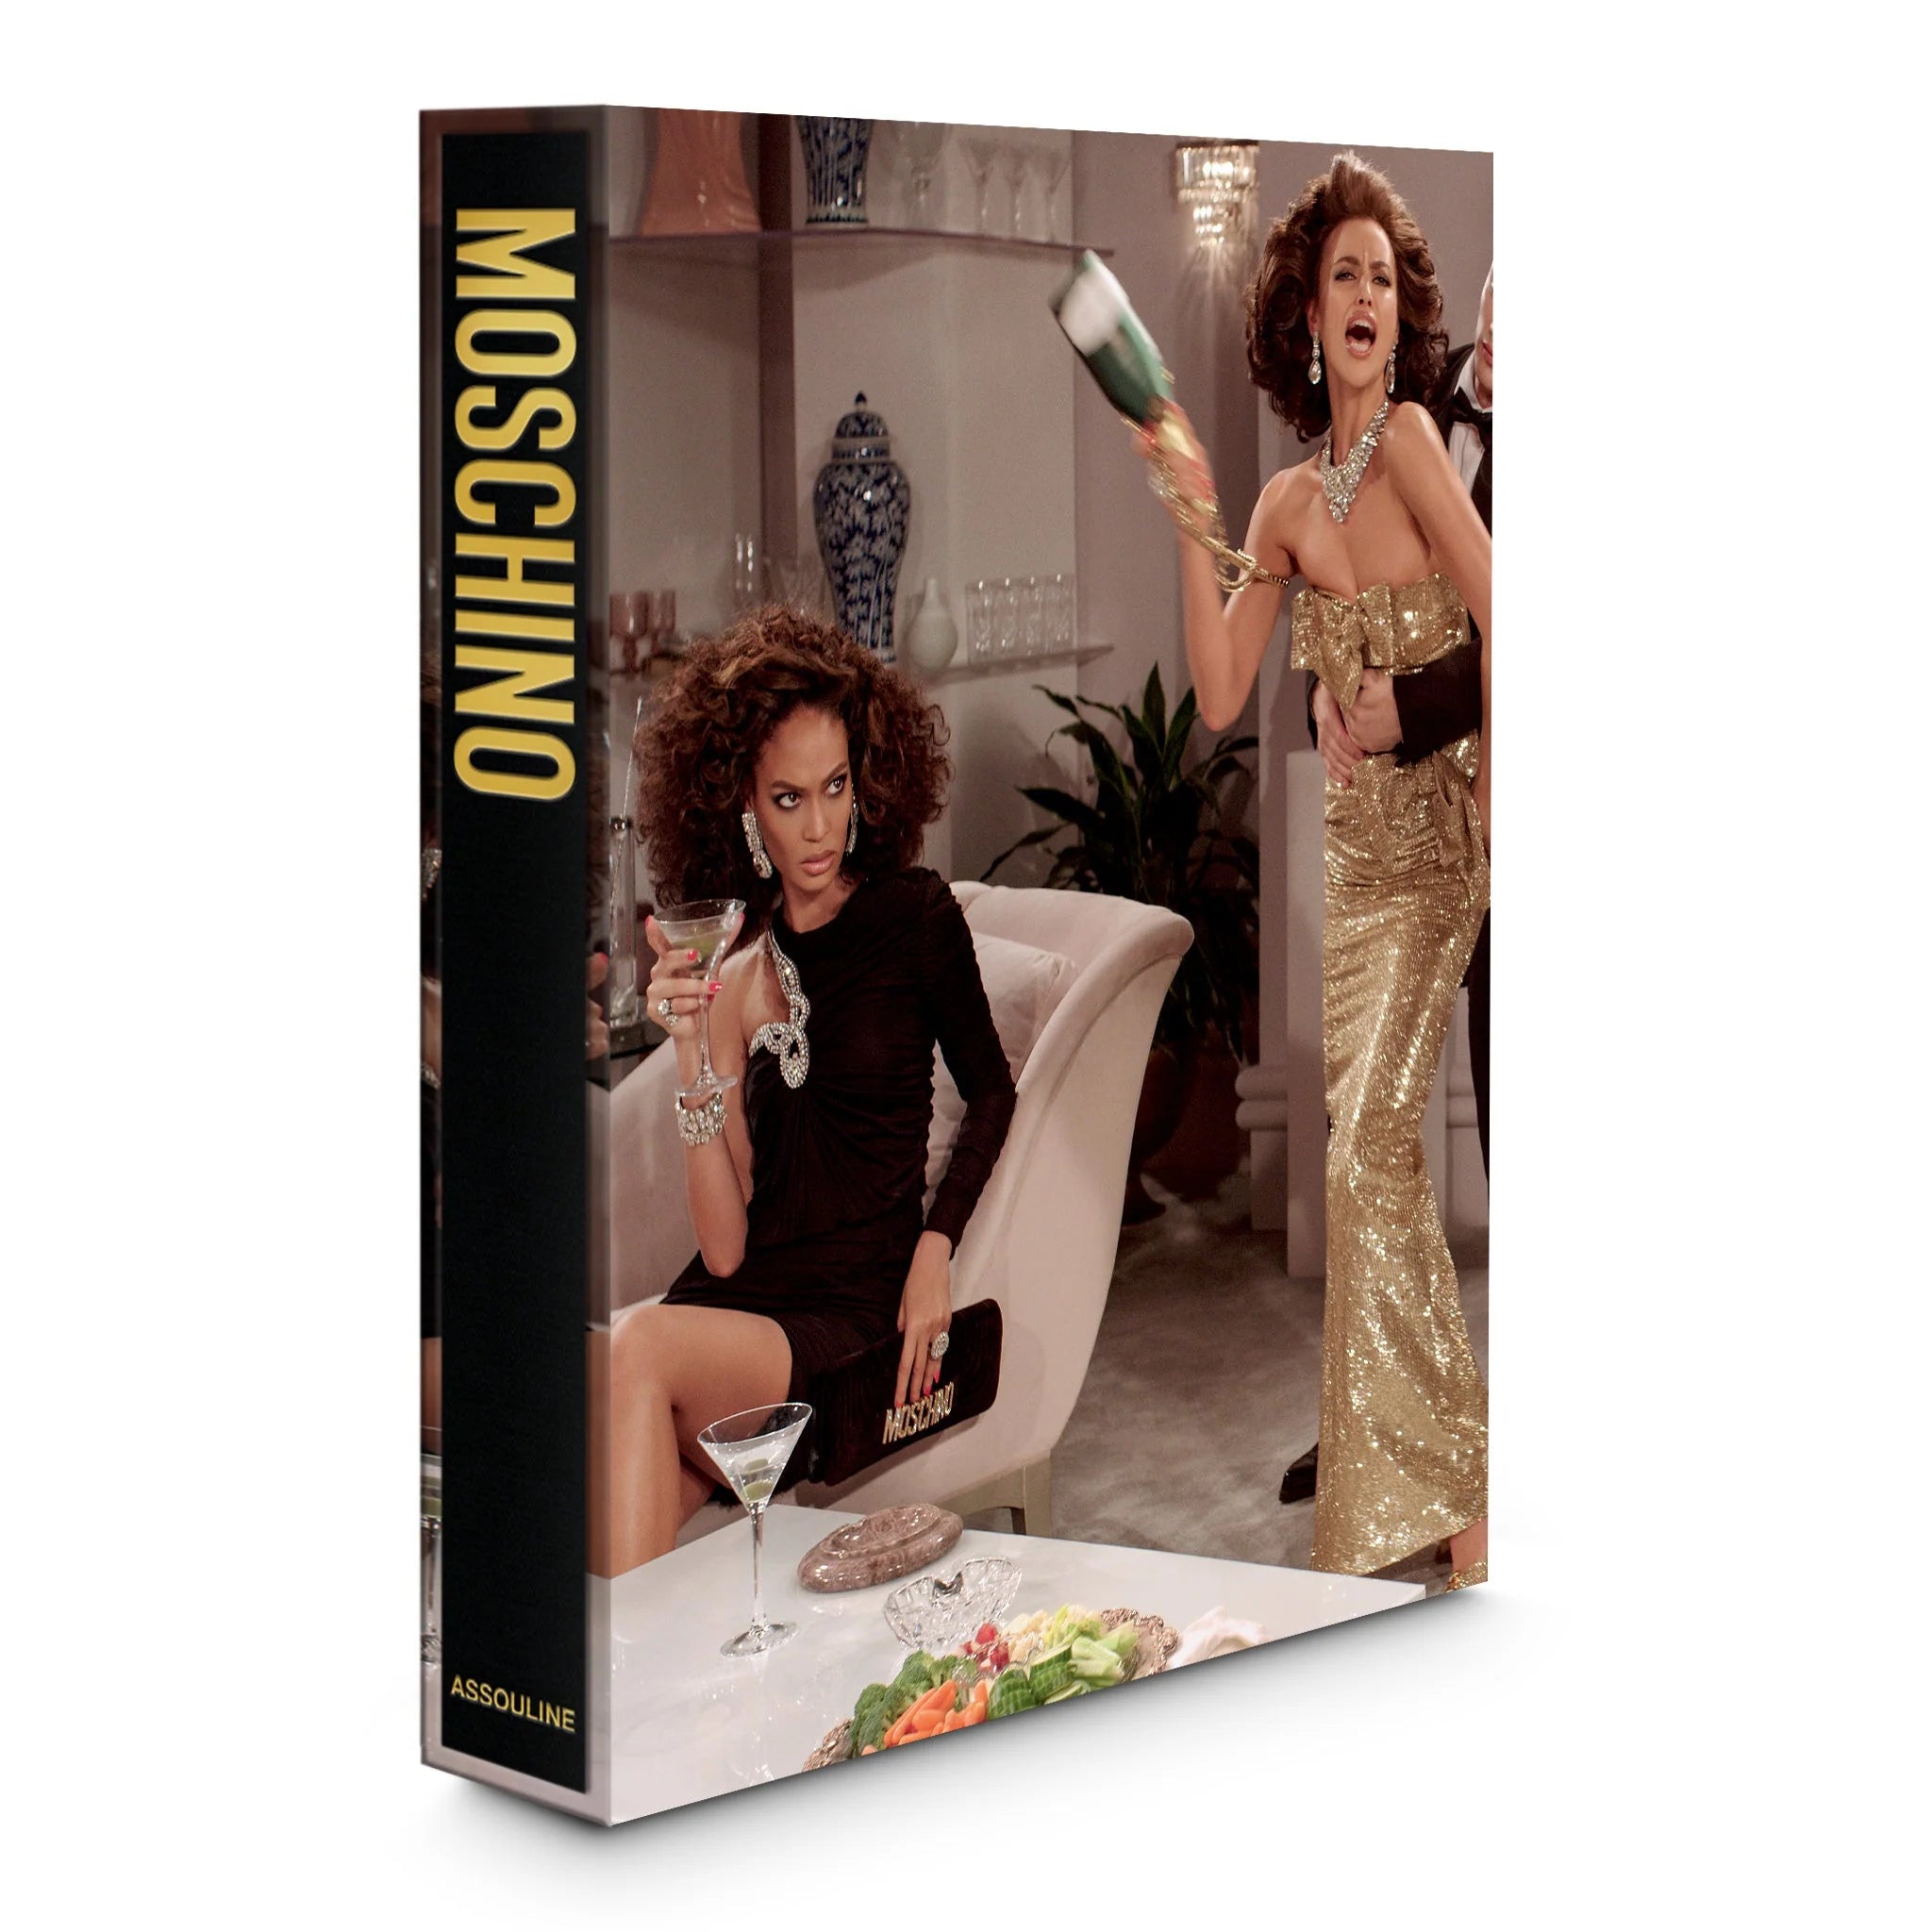 MOSCHINO, imagen del libro decorativo sobre moda de Assouline